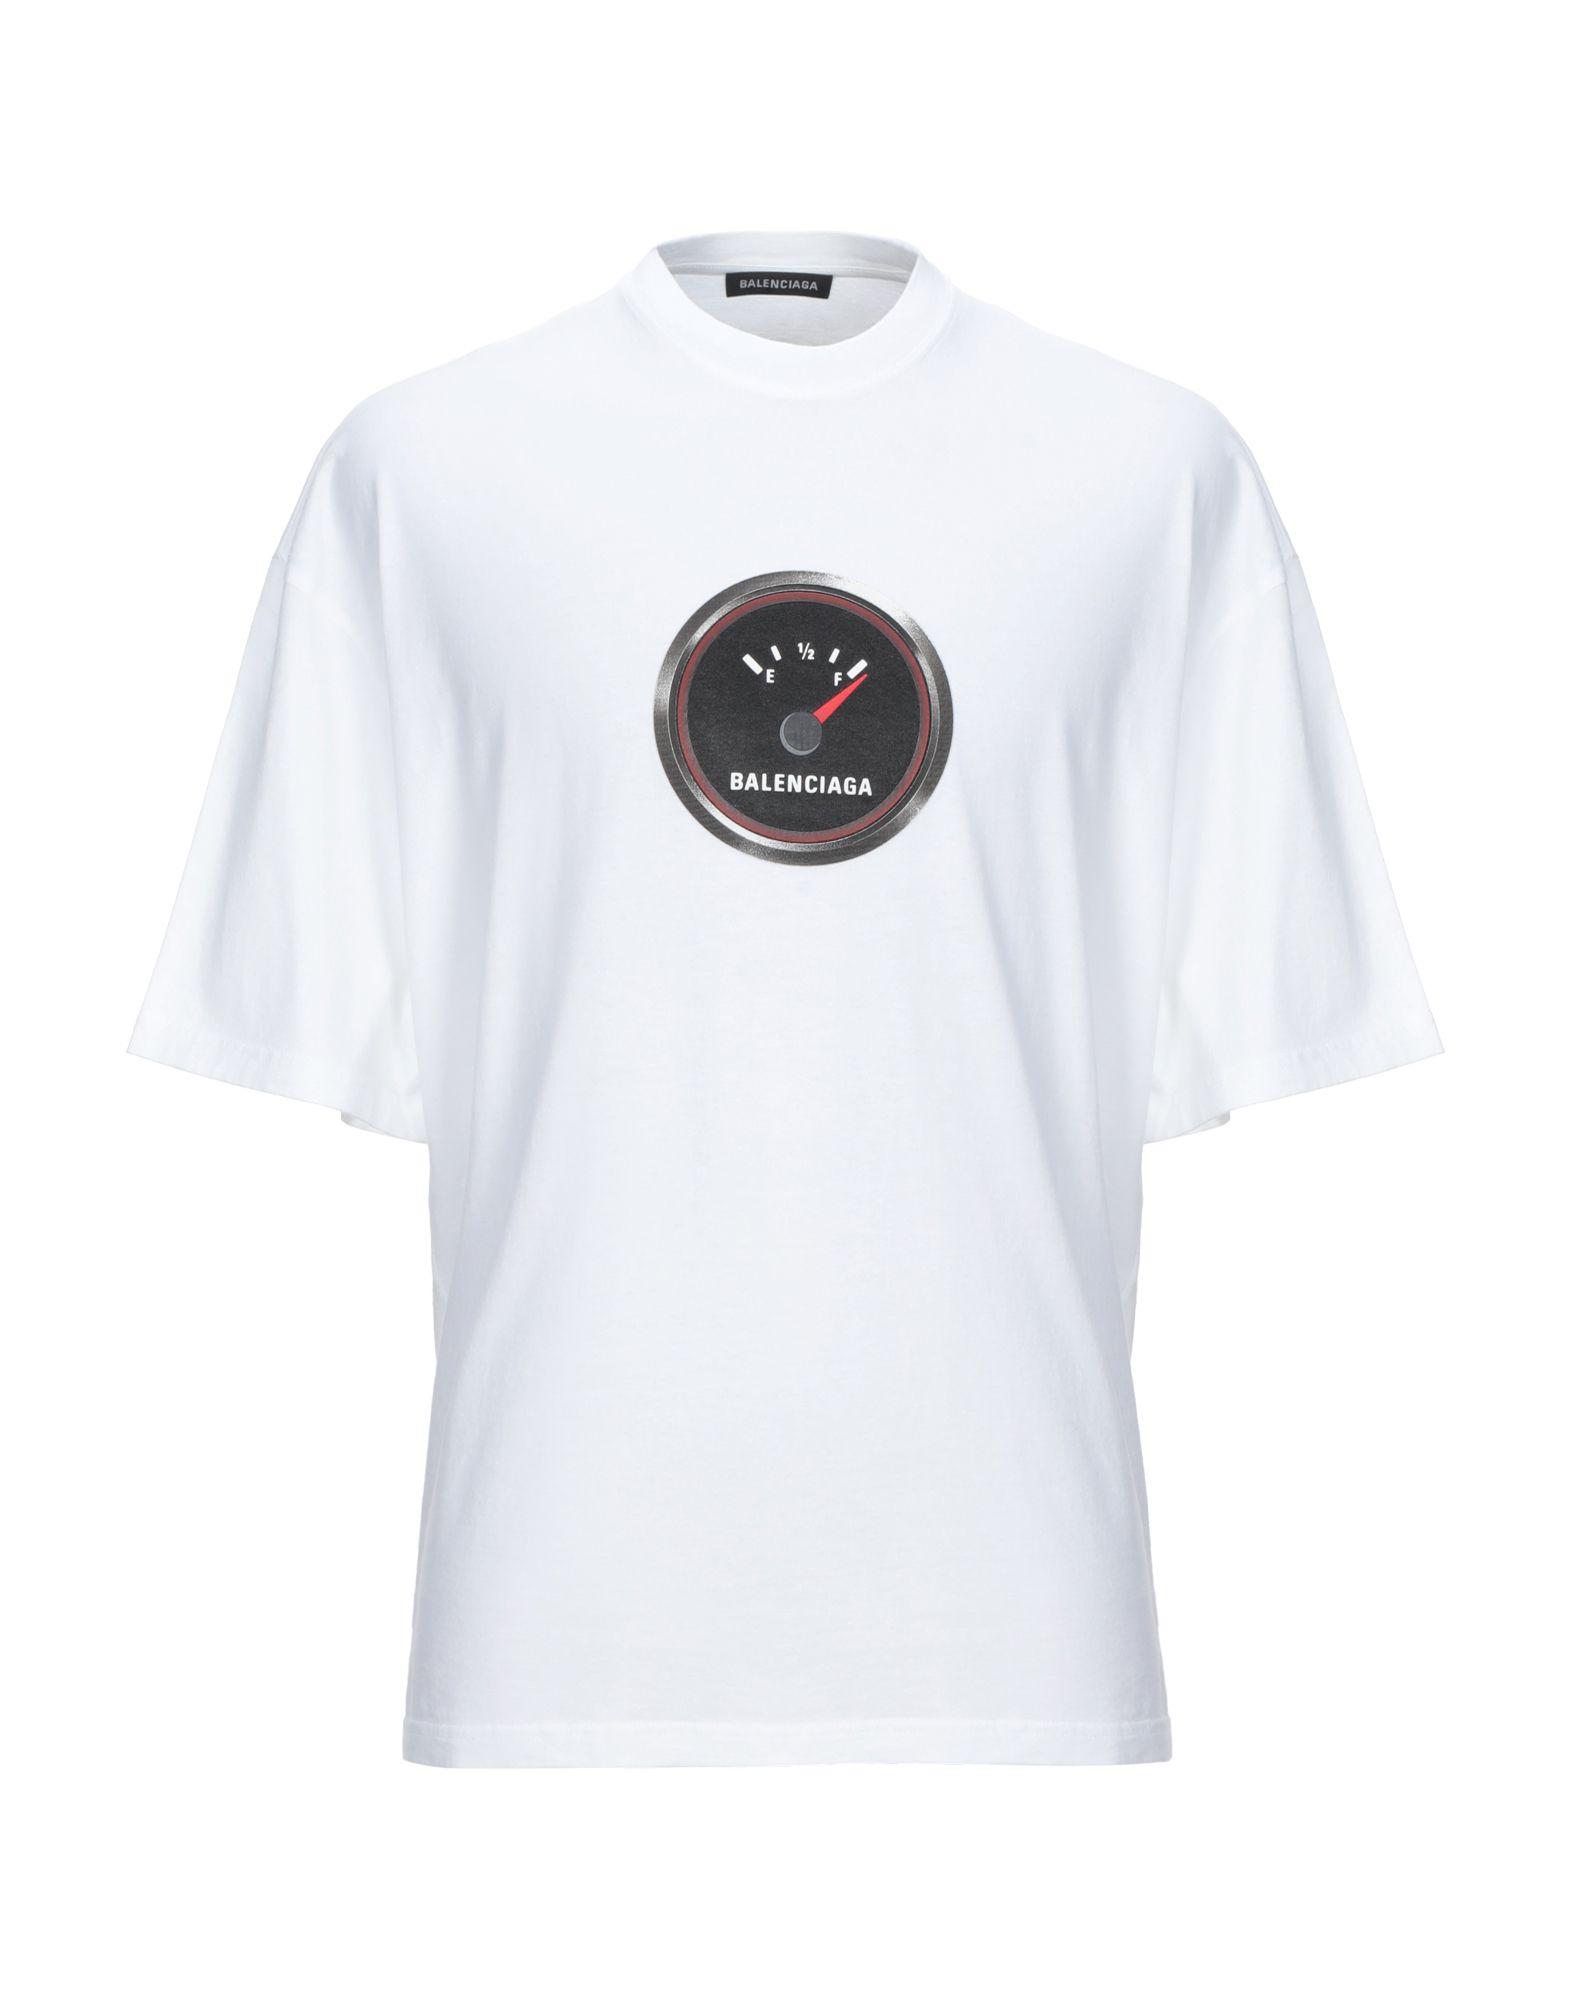 Balenciaga T-shirt in White for Men - Lyst